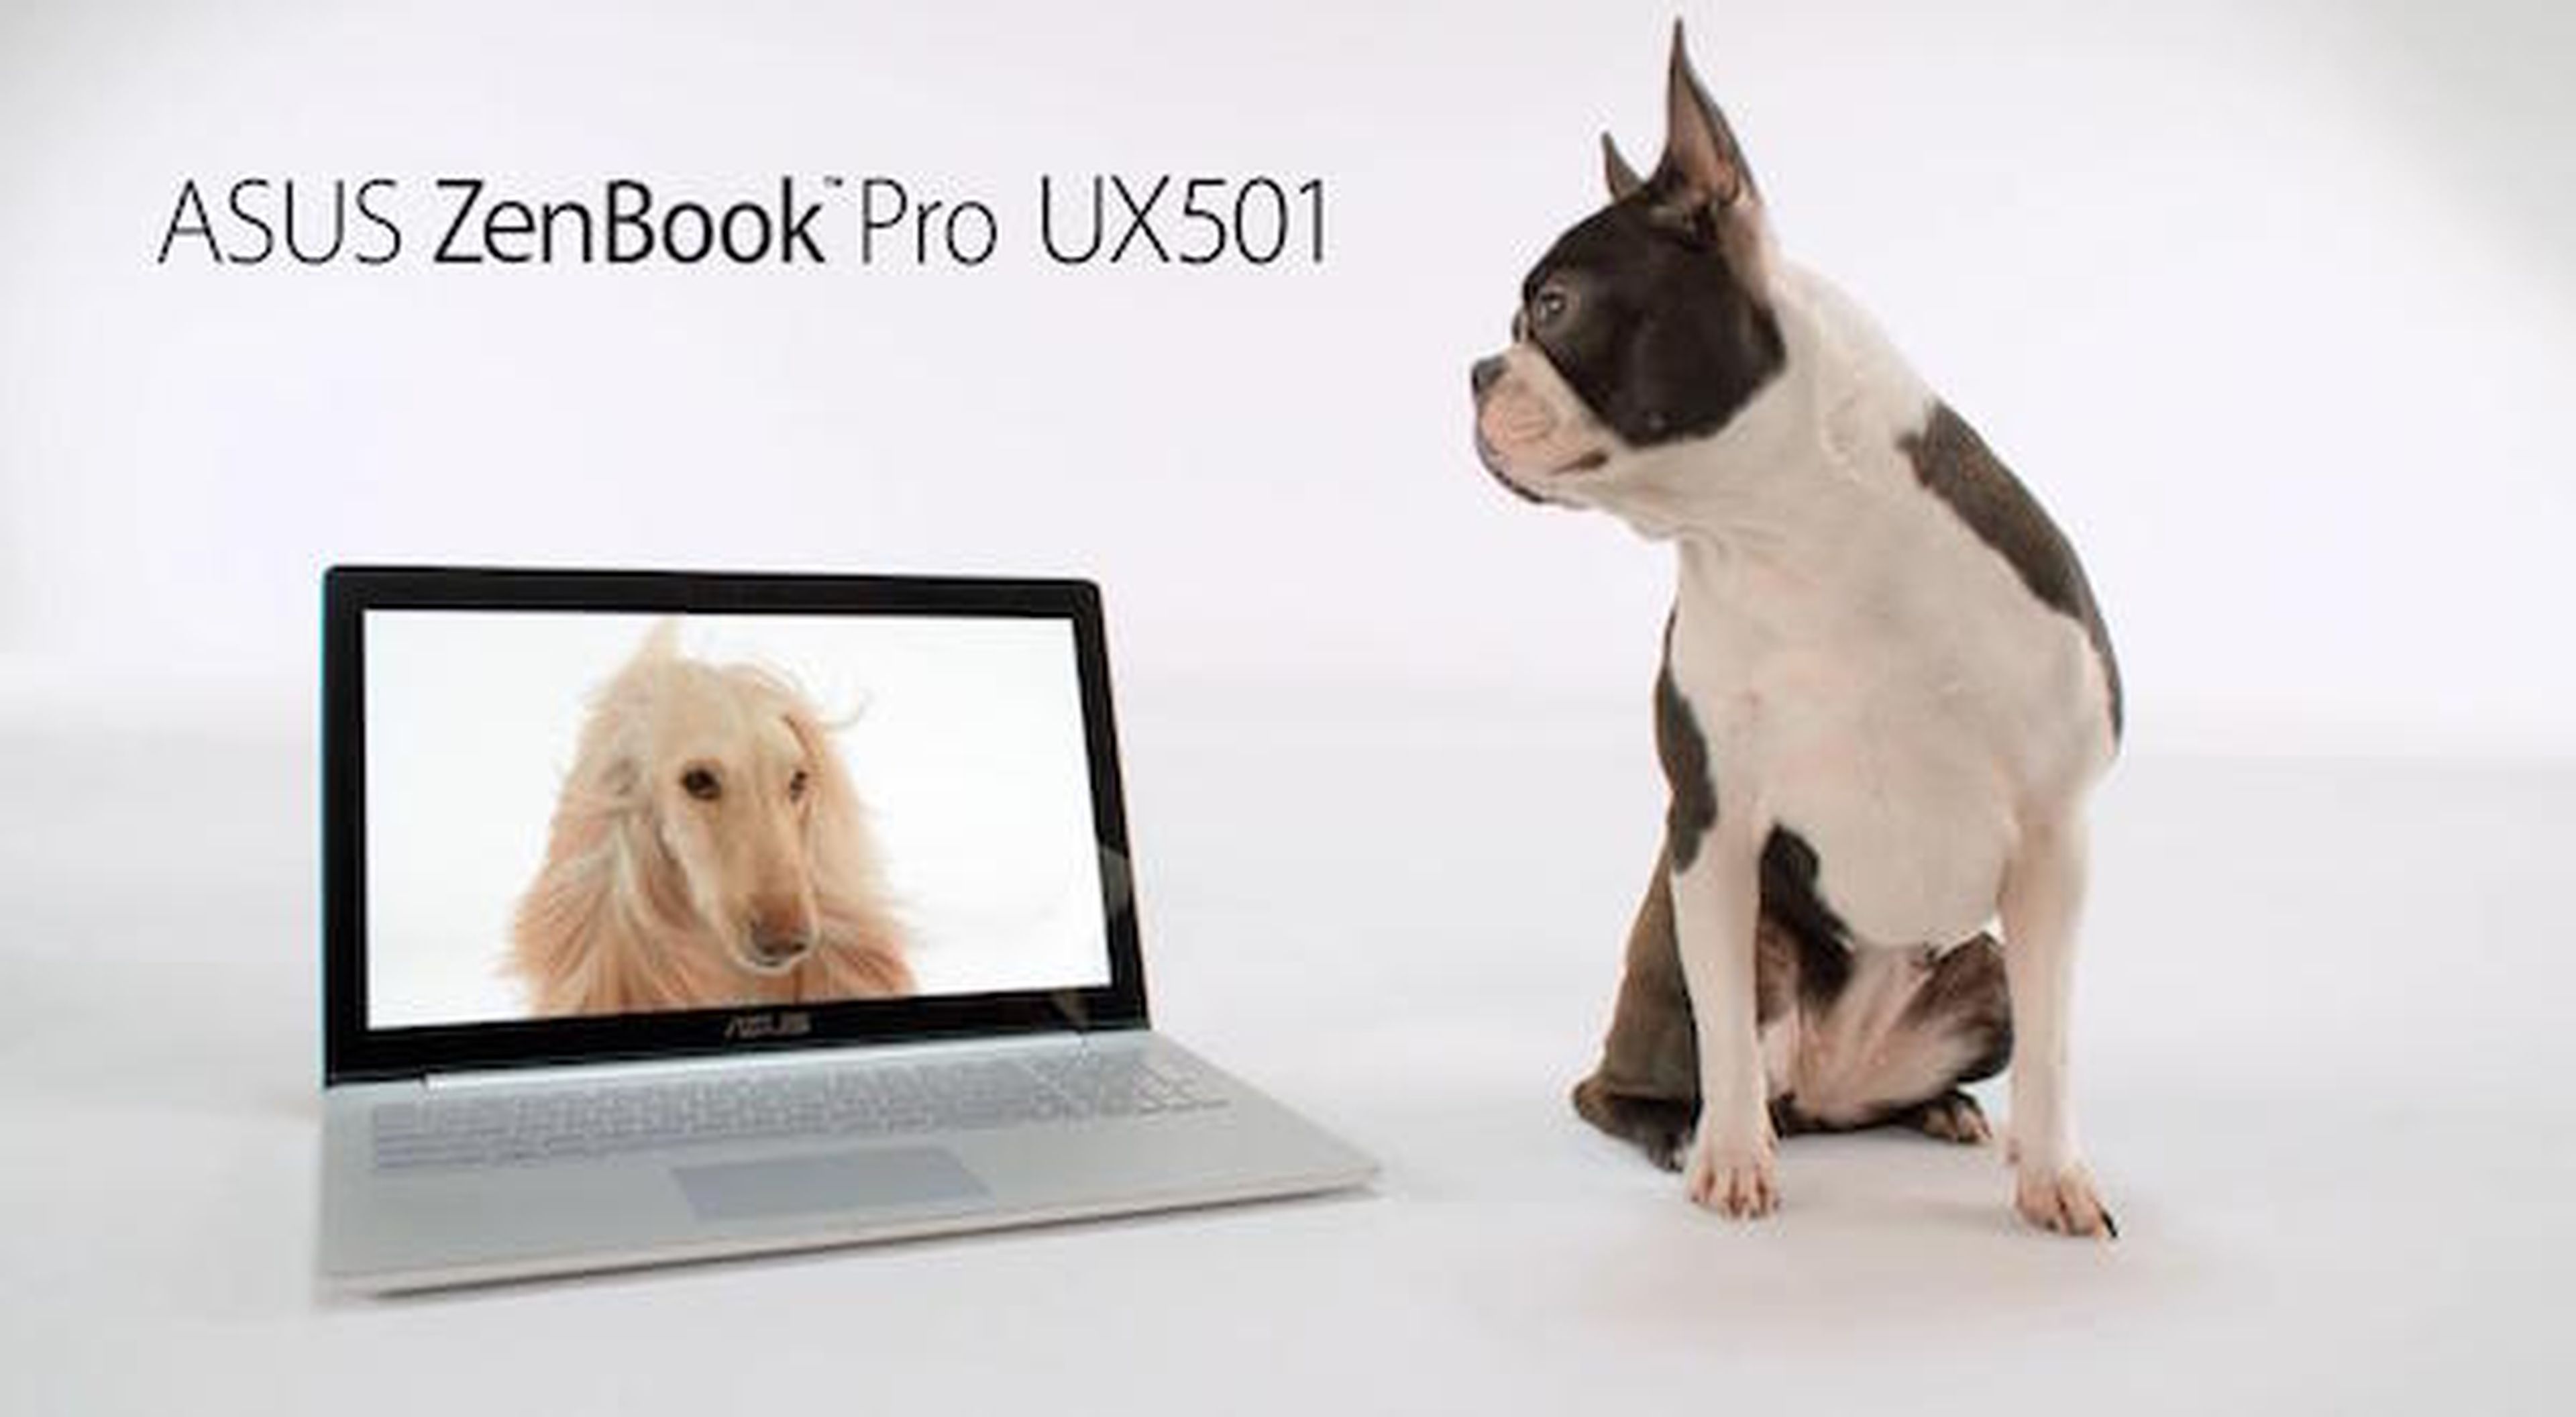 Asus SenBook Pro UX501